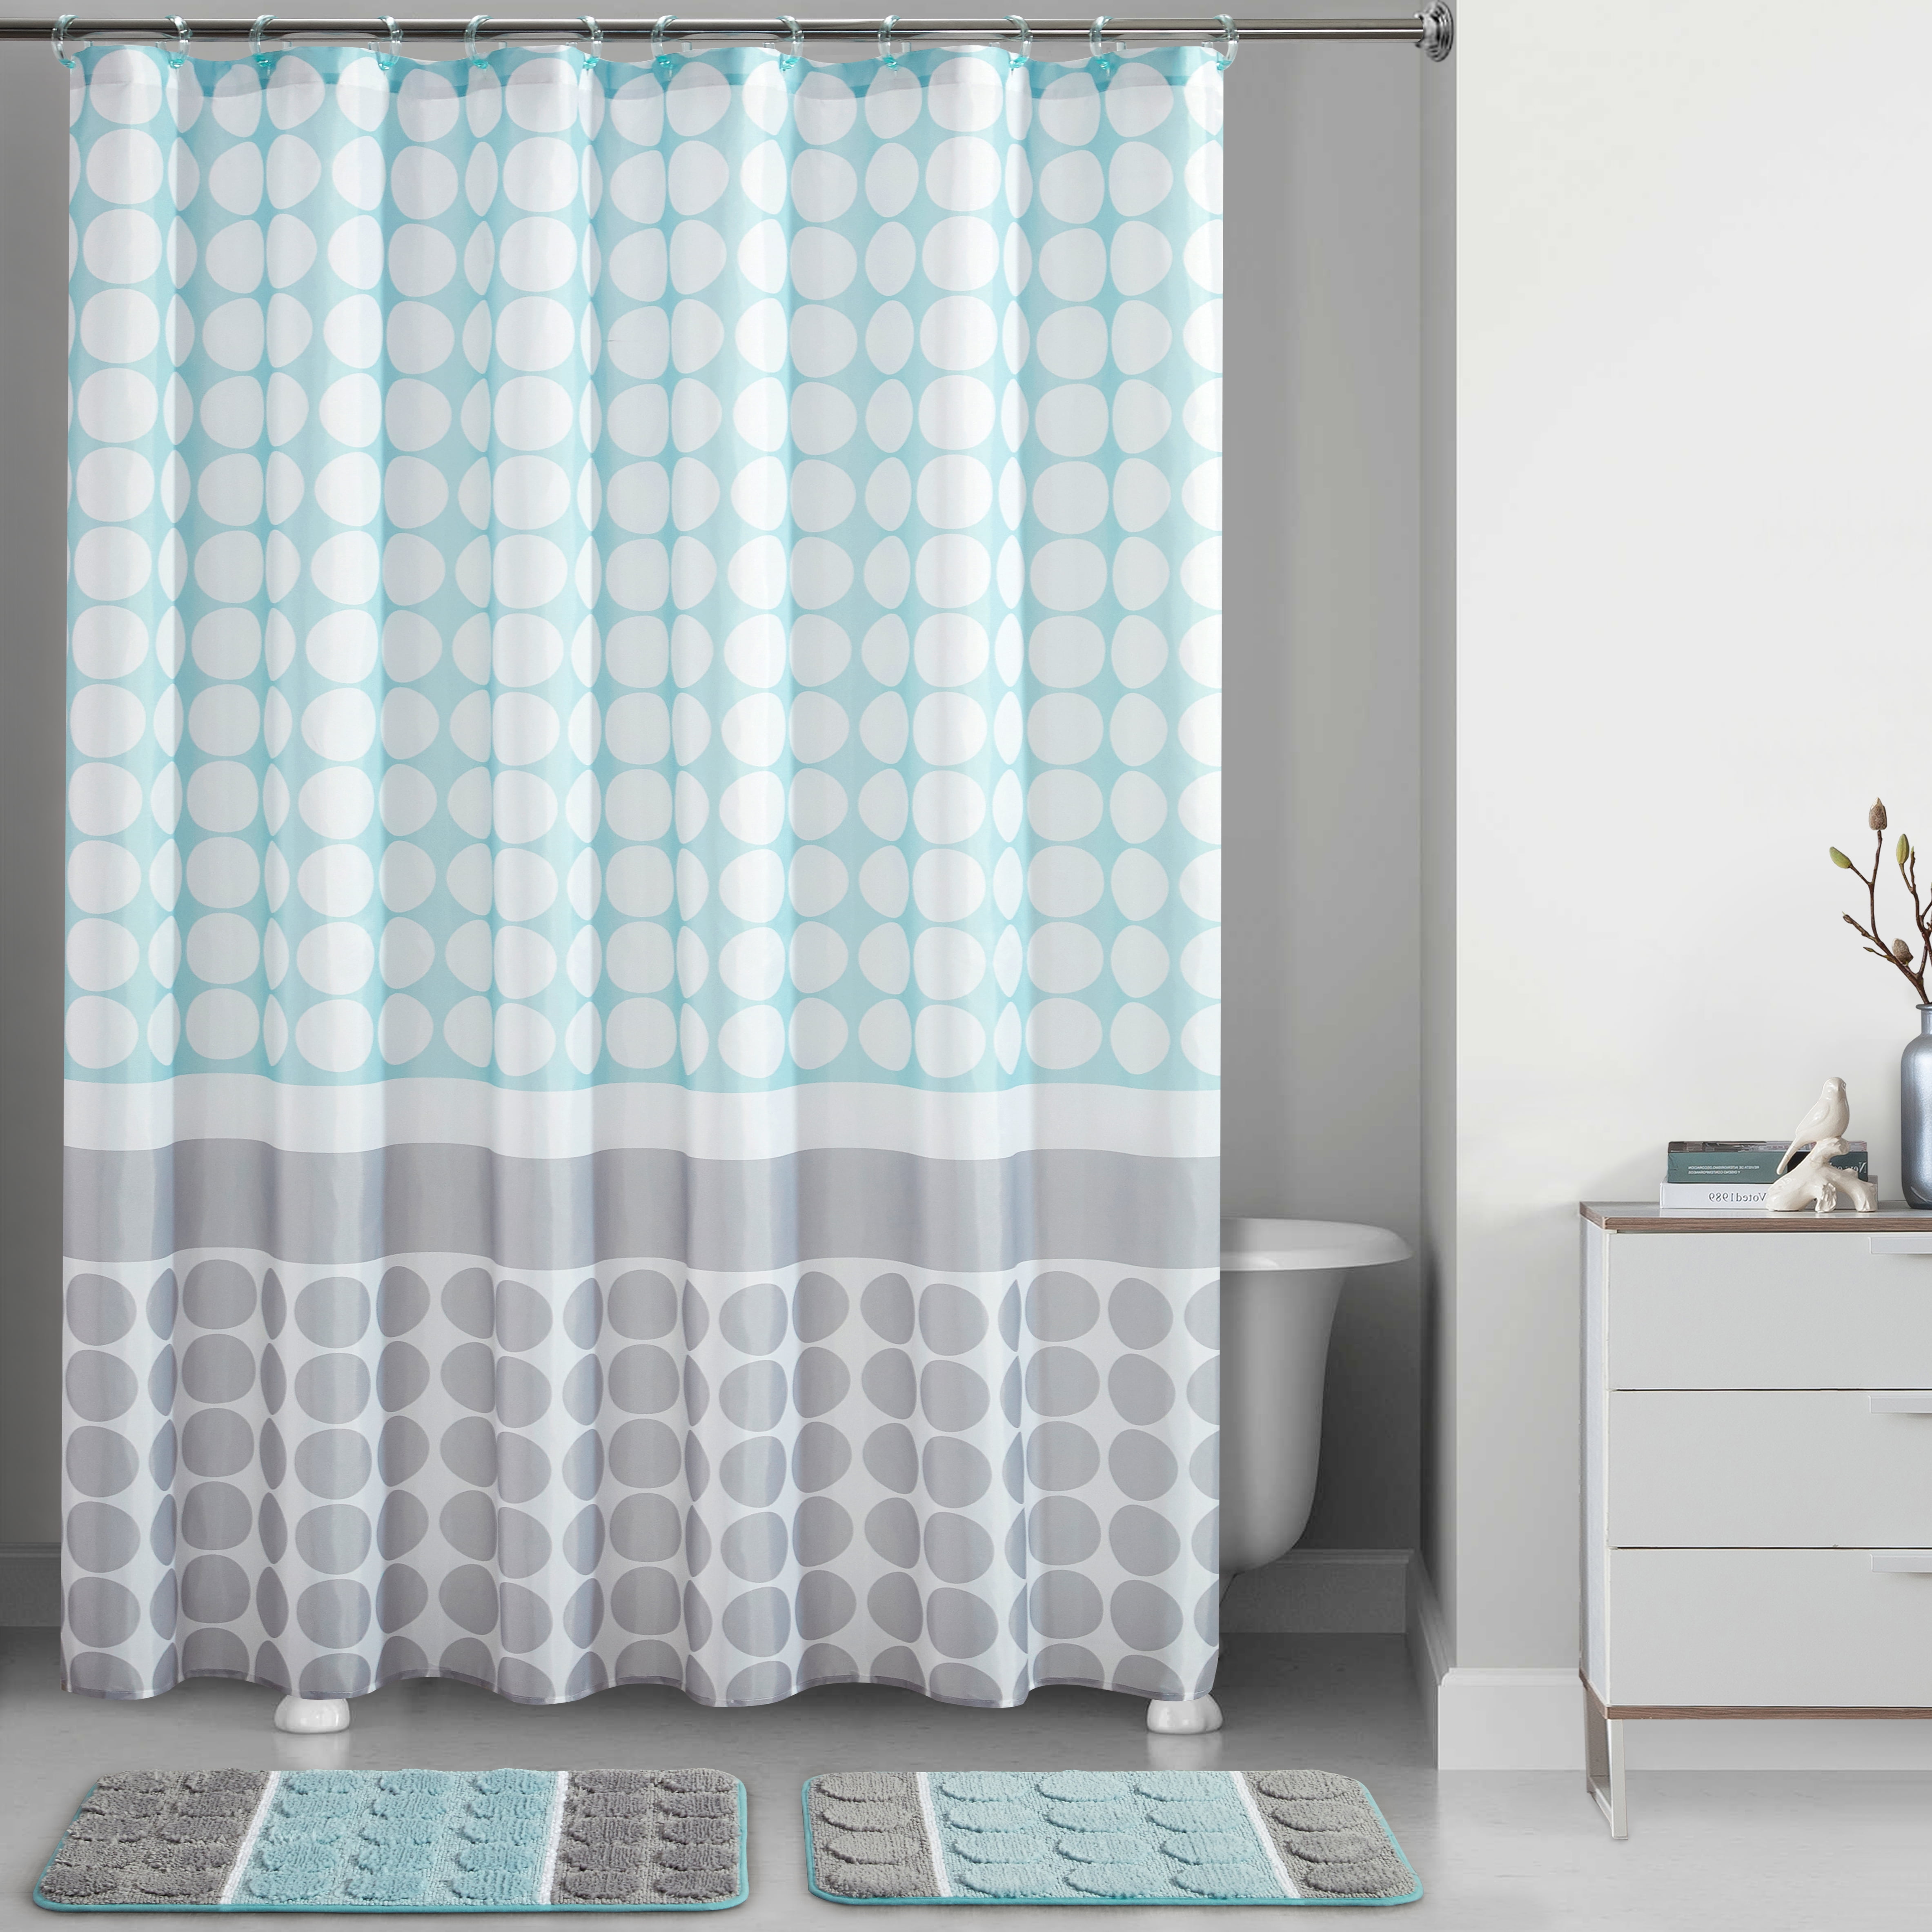 Blue Orbit Printed Shower Curtain Bath, Blue And Grey Shower Curtain Sets